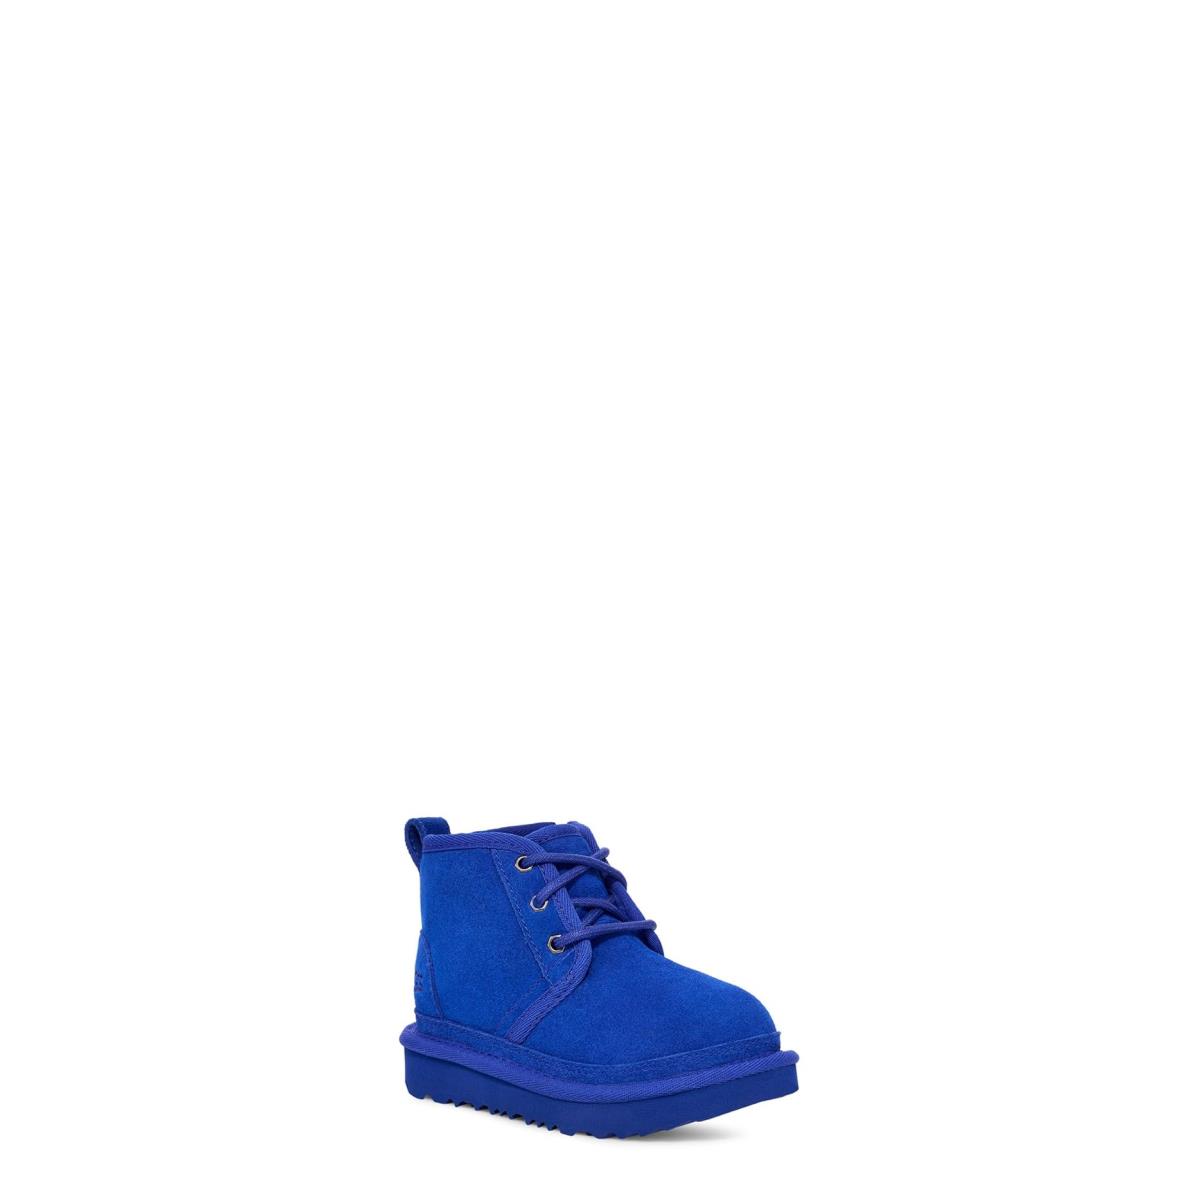 Boy`s Boots Ugg Kids Neumel II Toddler/little Kid Regal Blue